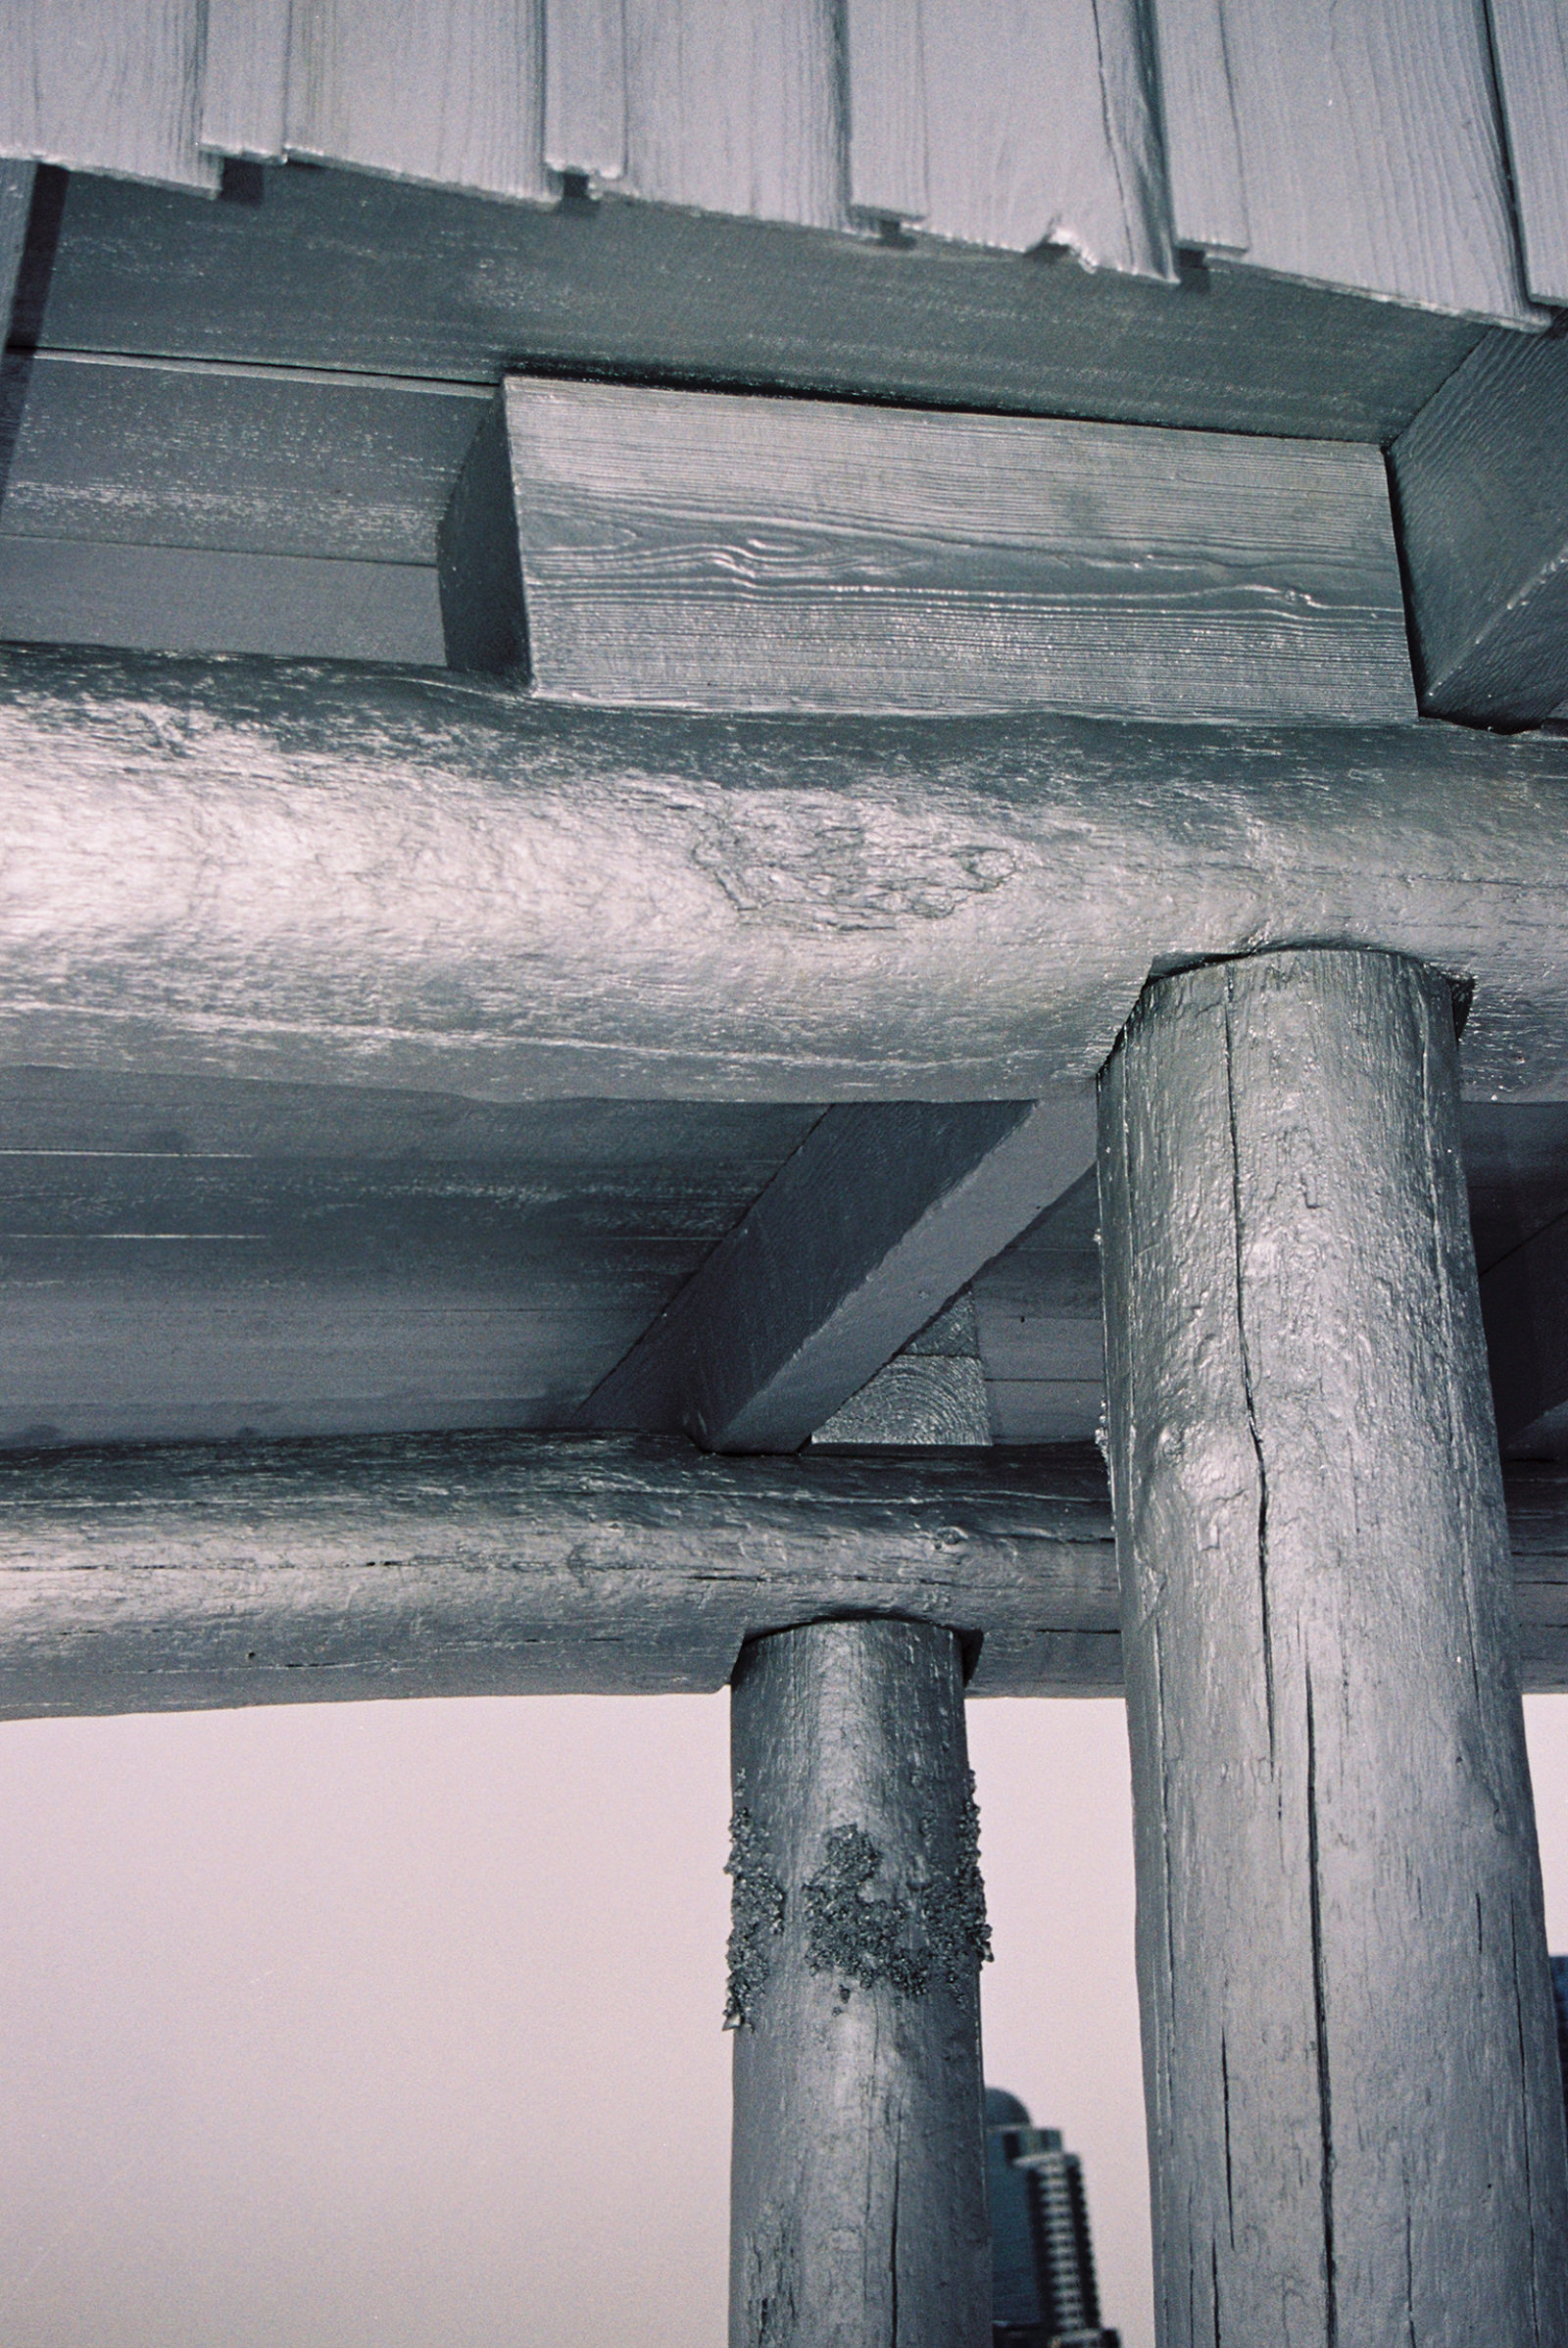 Liz Magor, LightShed (detail), 2005, cast aluminum, dimensions variable. Installation view, Coal Harbour, Vancouver, BC